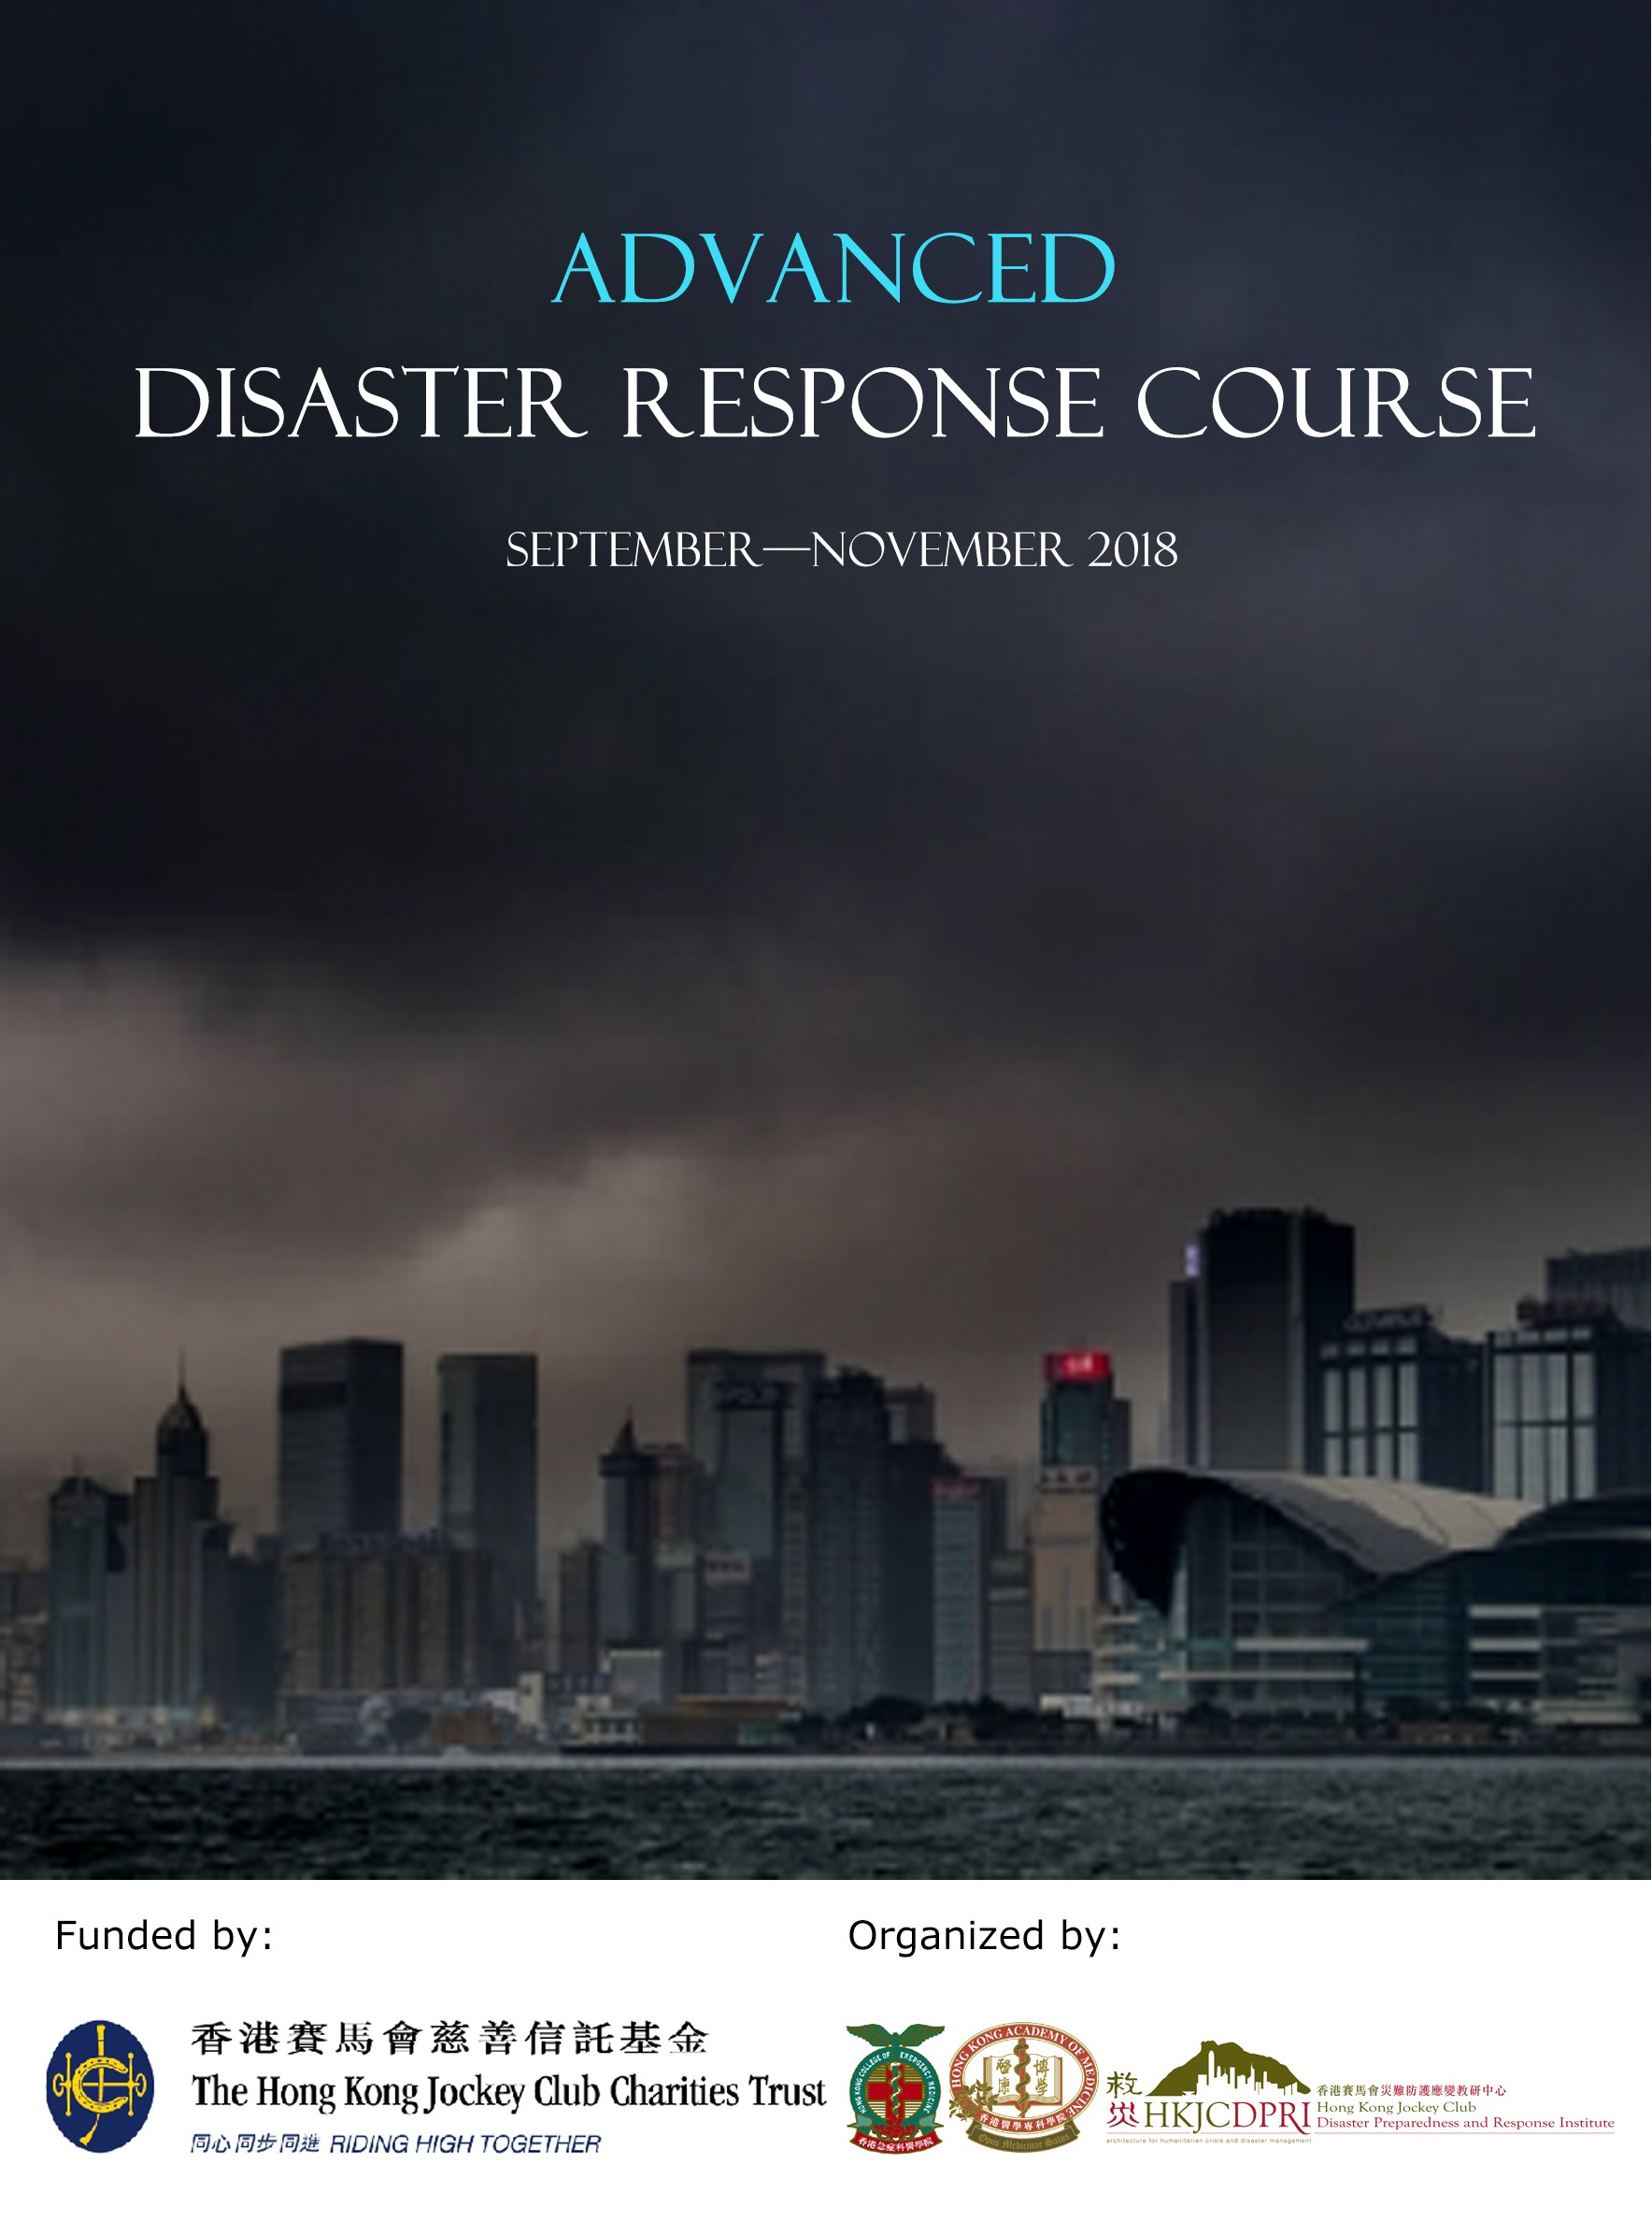 Advanced Disaster Response Course, September to November 2018